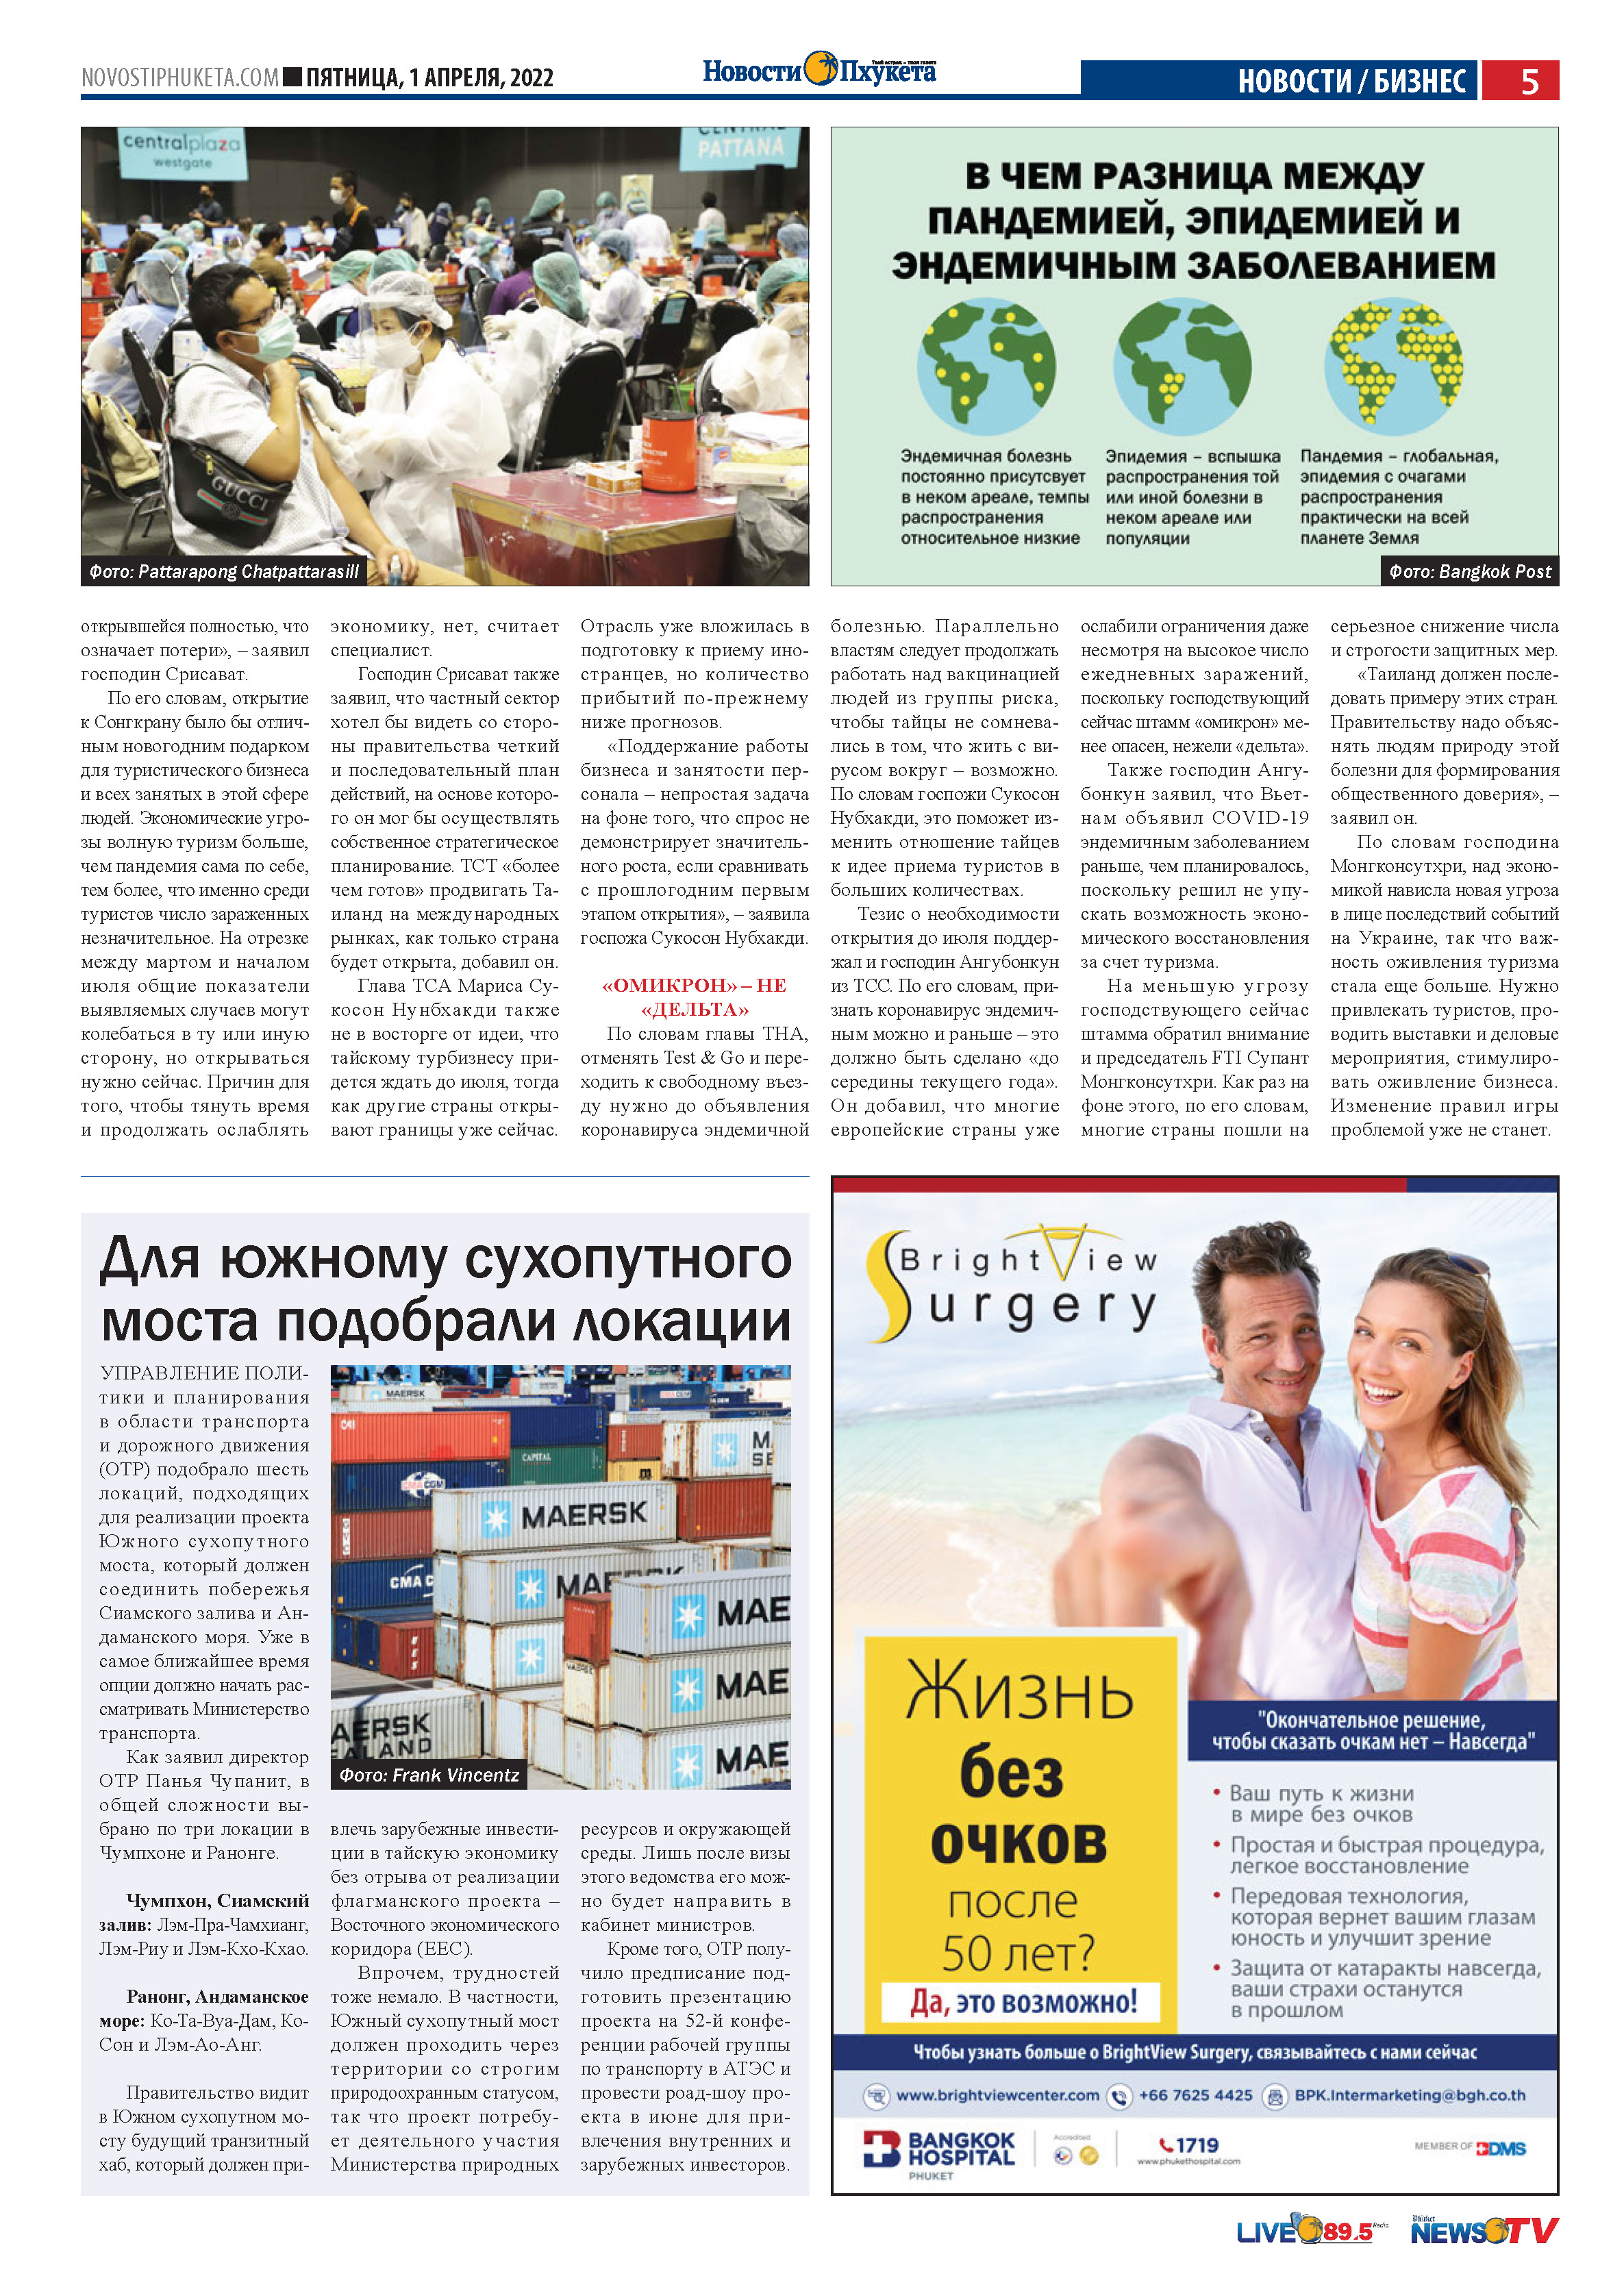 Phuket Newspaper - https://www.novostiphuketa.com/archive/01-04-2022/01-04-2022_Page_05.jpg